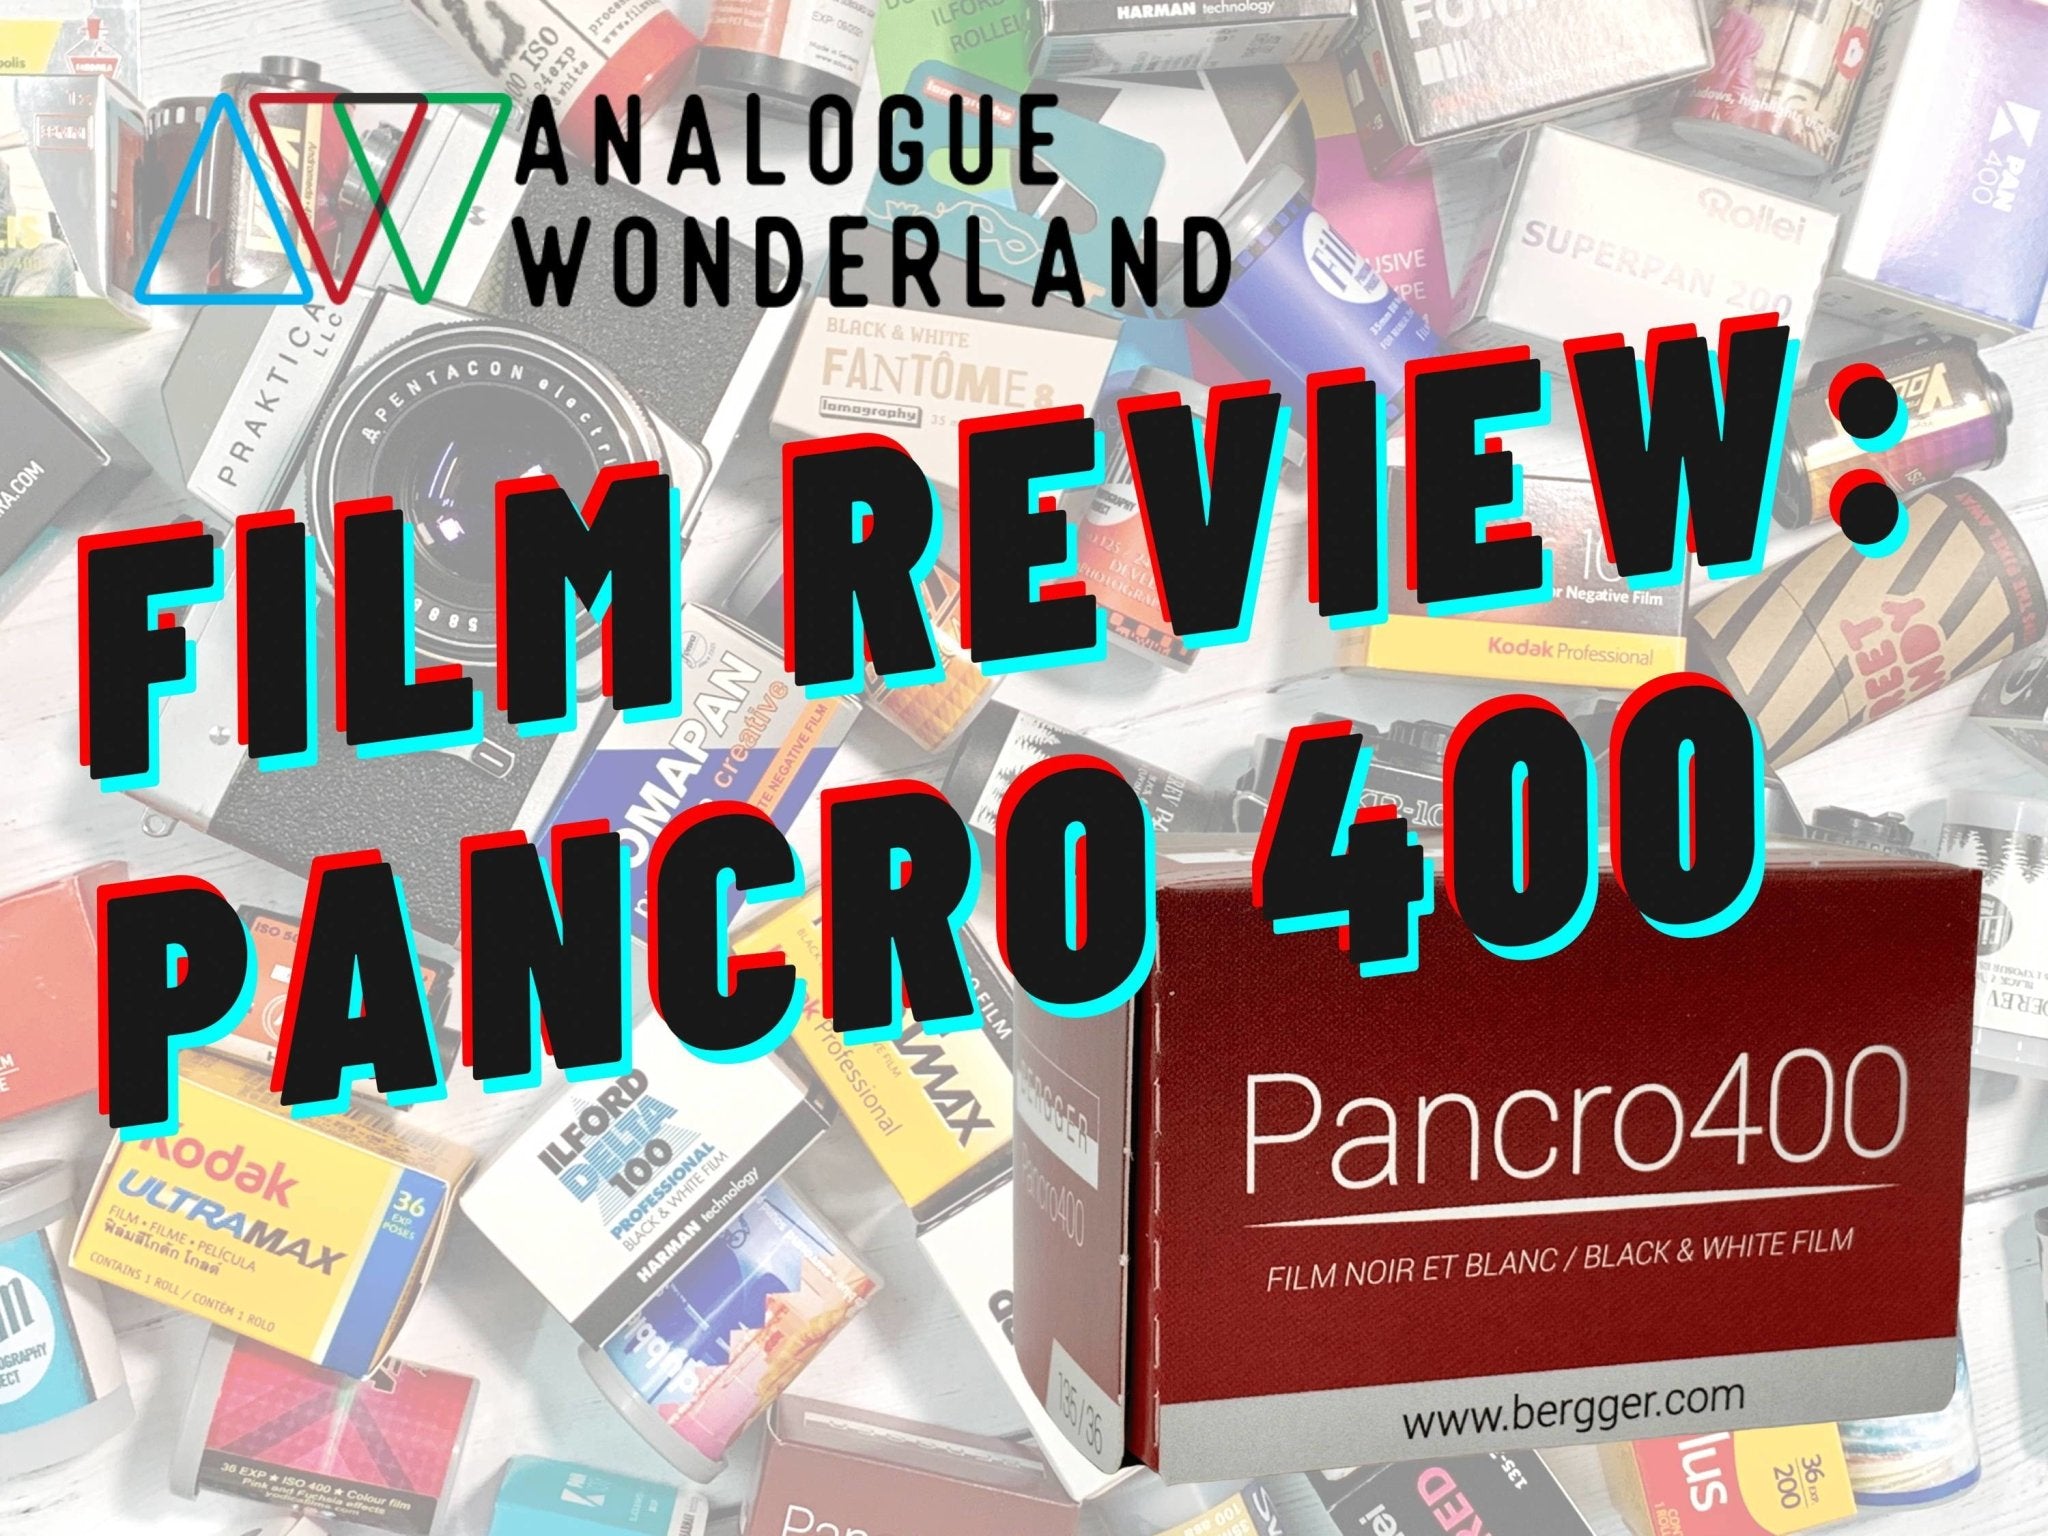 Bergger Pancro 400 Review - Analogue Wonderland